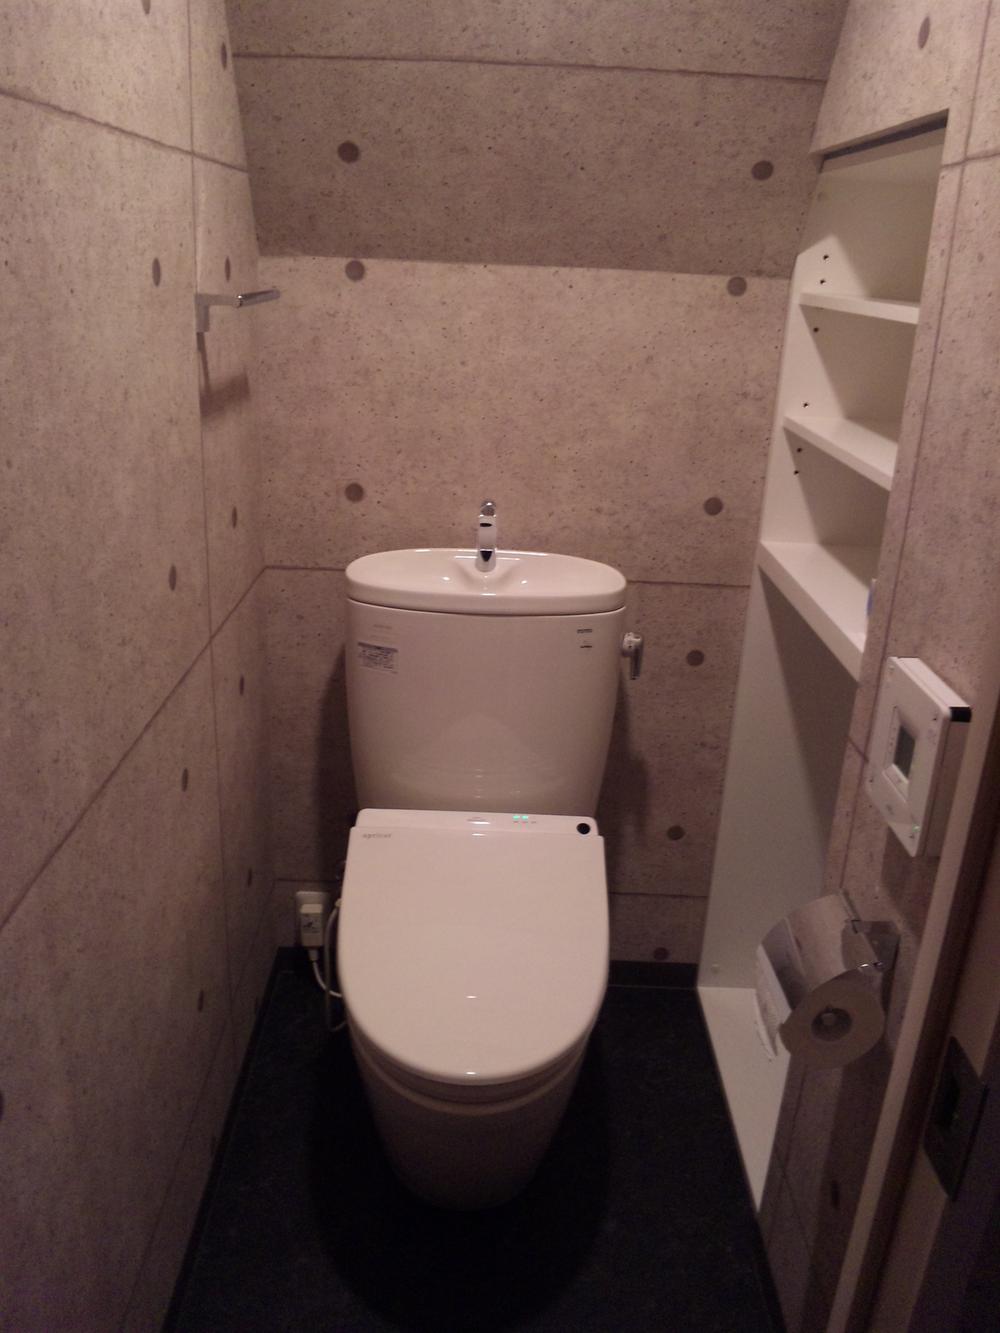 Toilet. Indoor (January 2013) Shooting